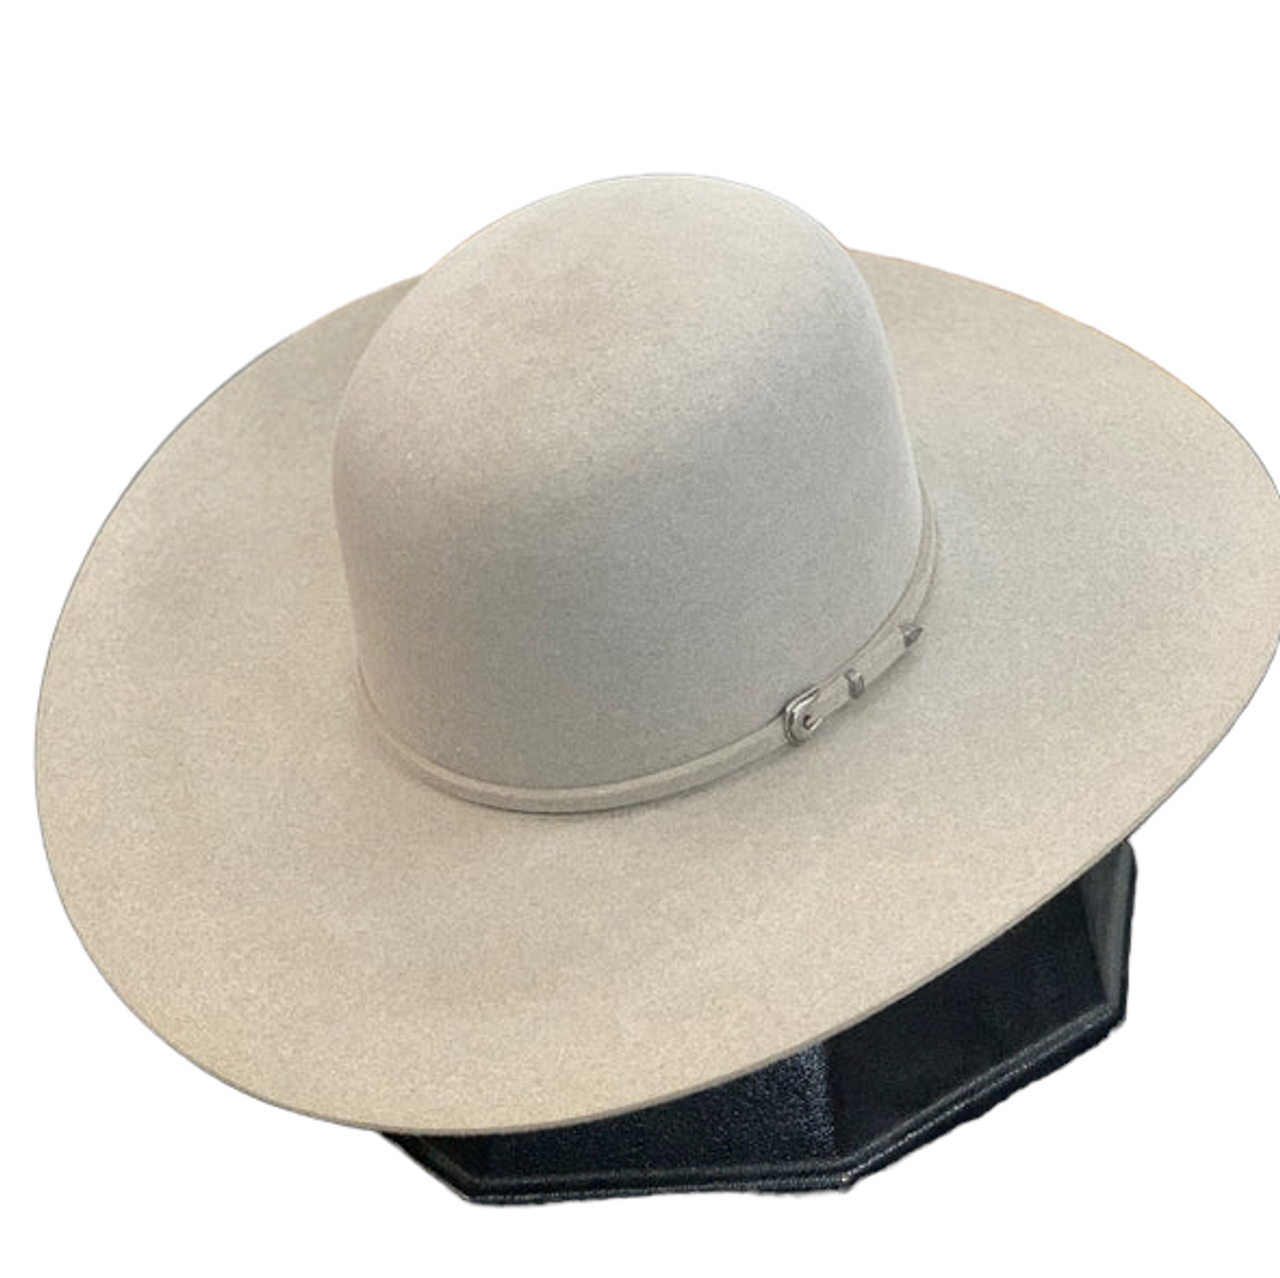 W. Alboum Felt Hats- Rodeo King - 7X - Tan Belly - Billy's Western